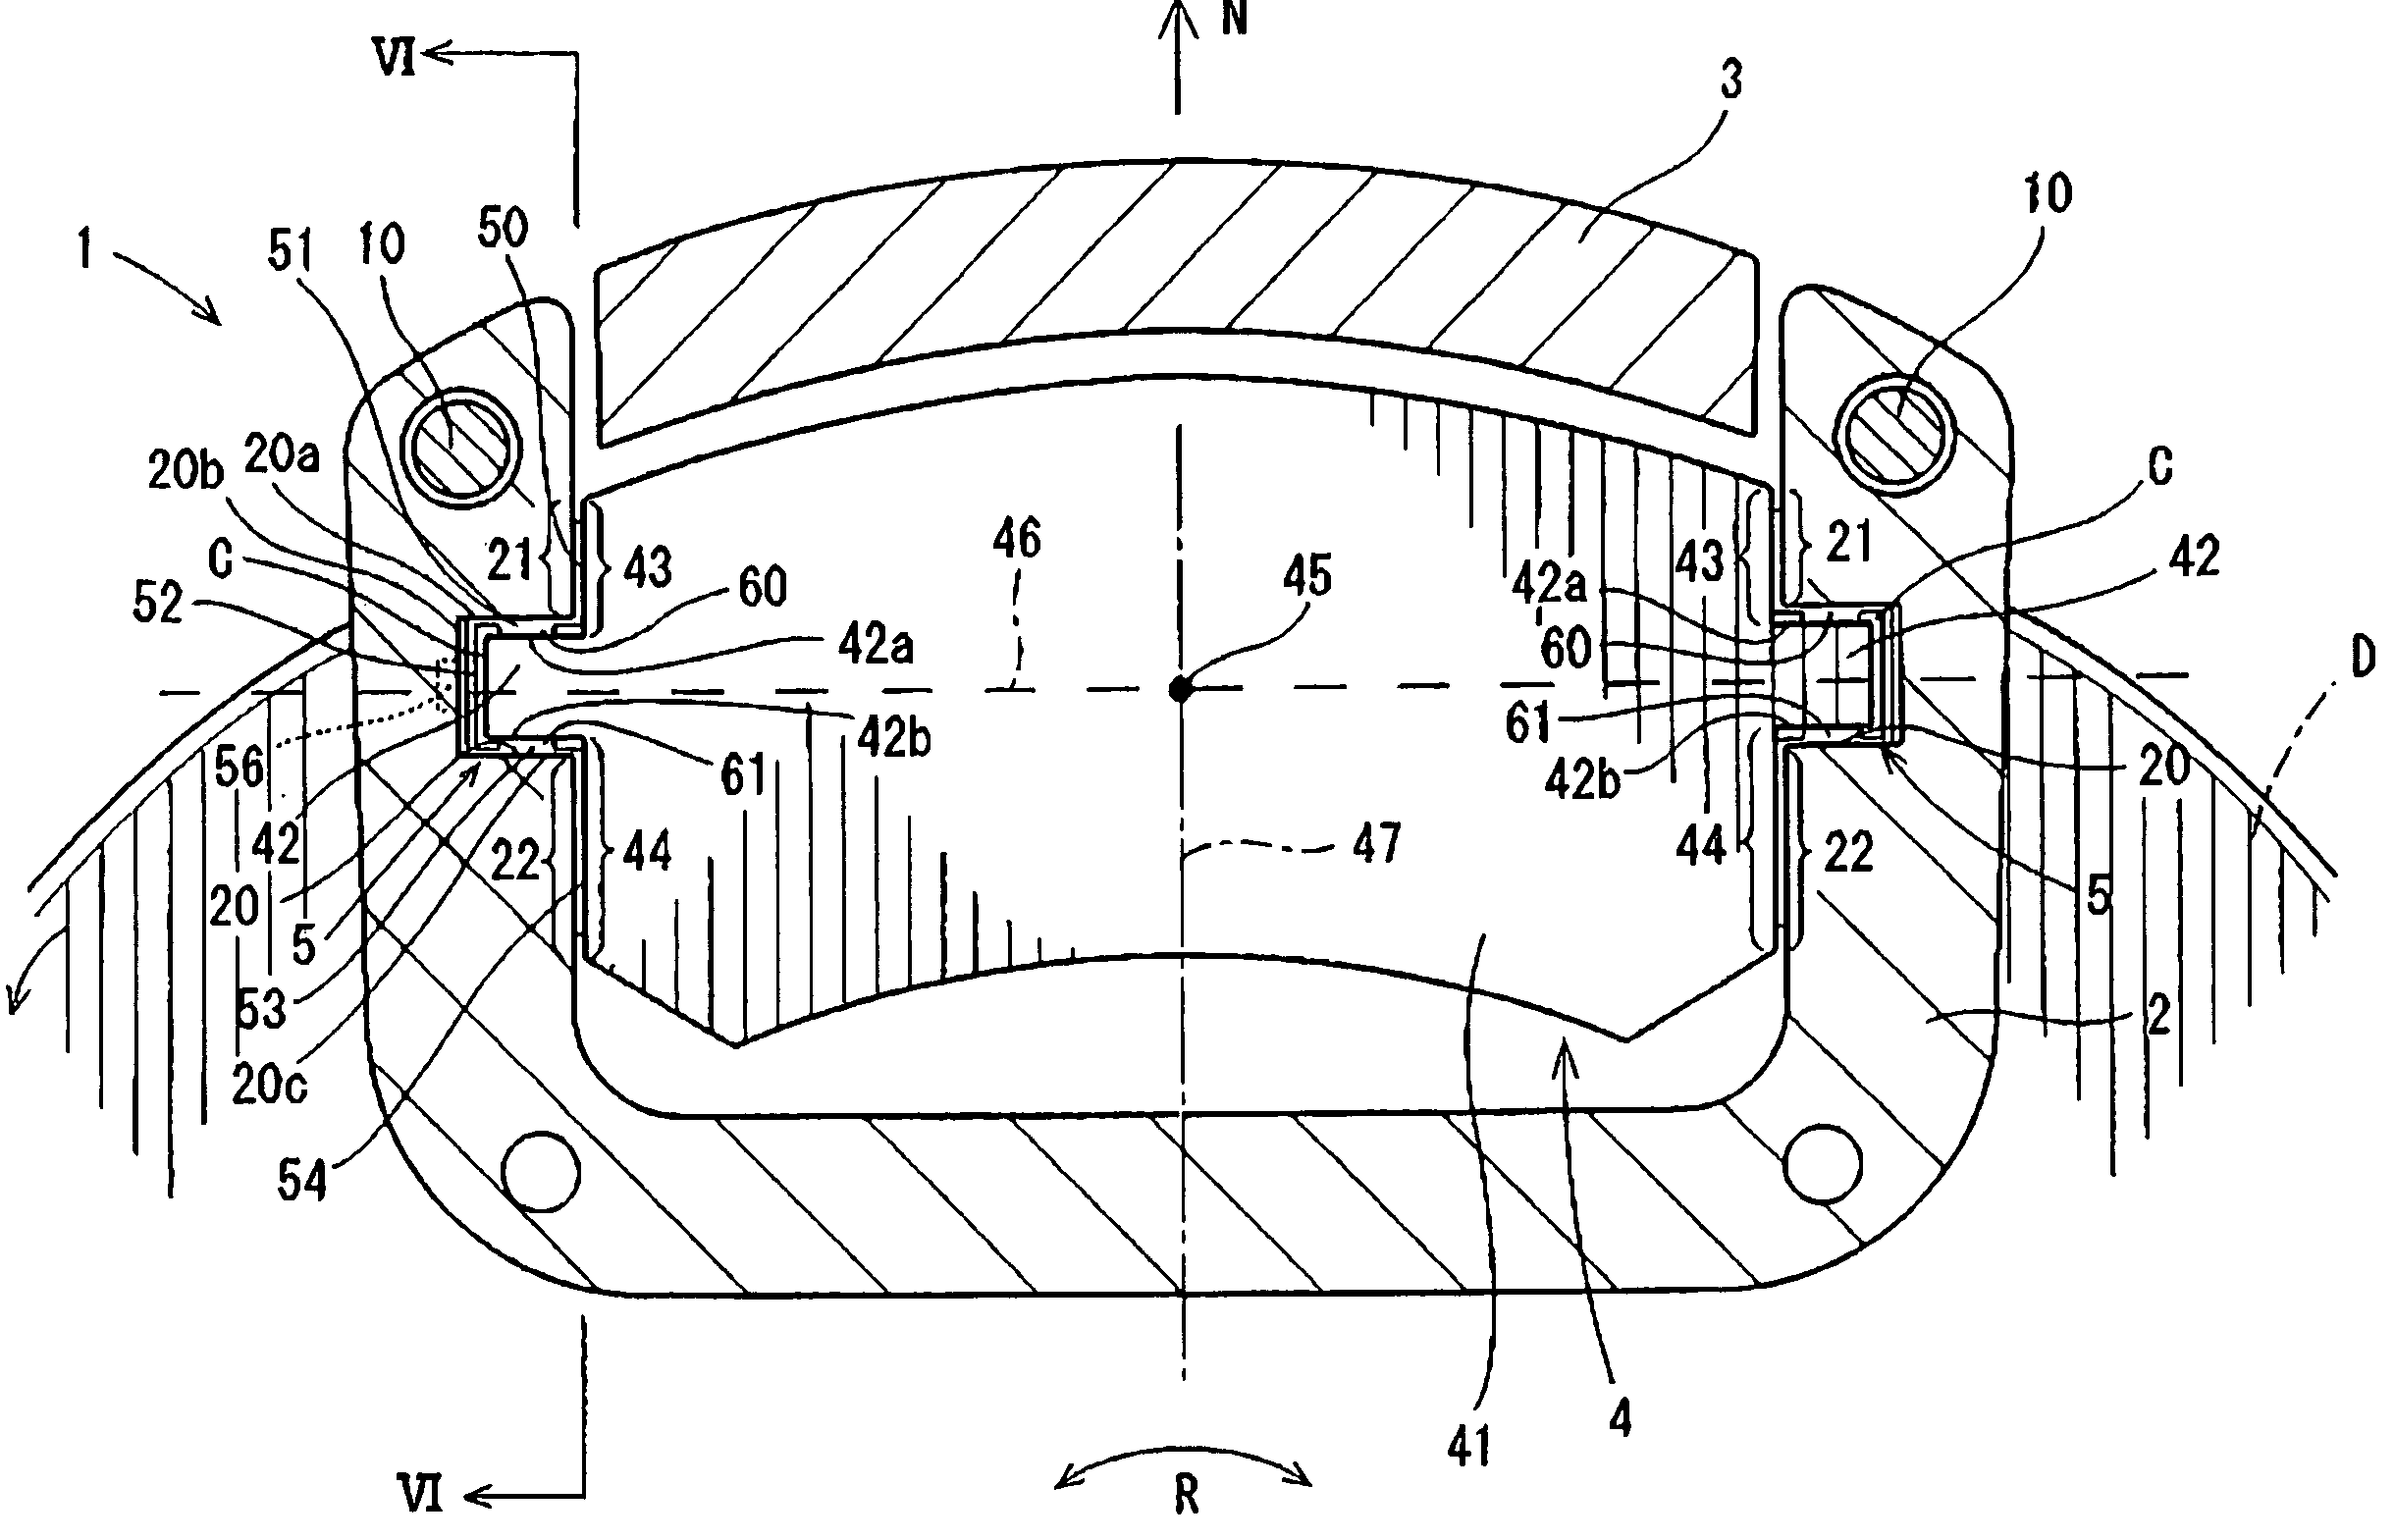 Disk brake devices